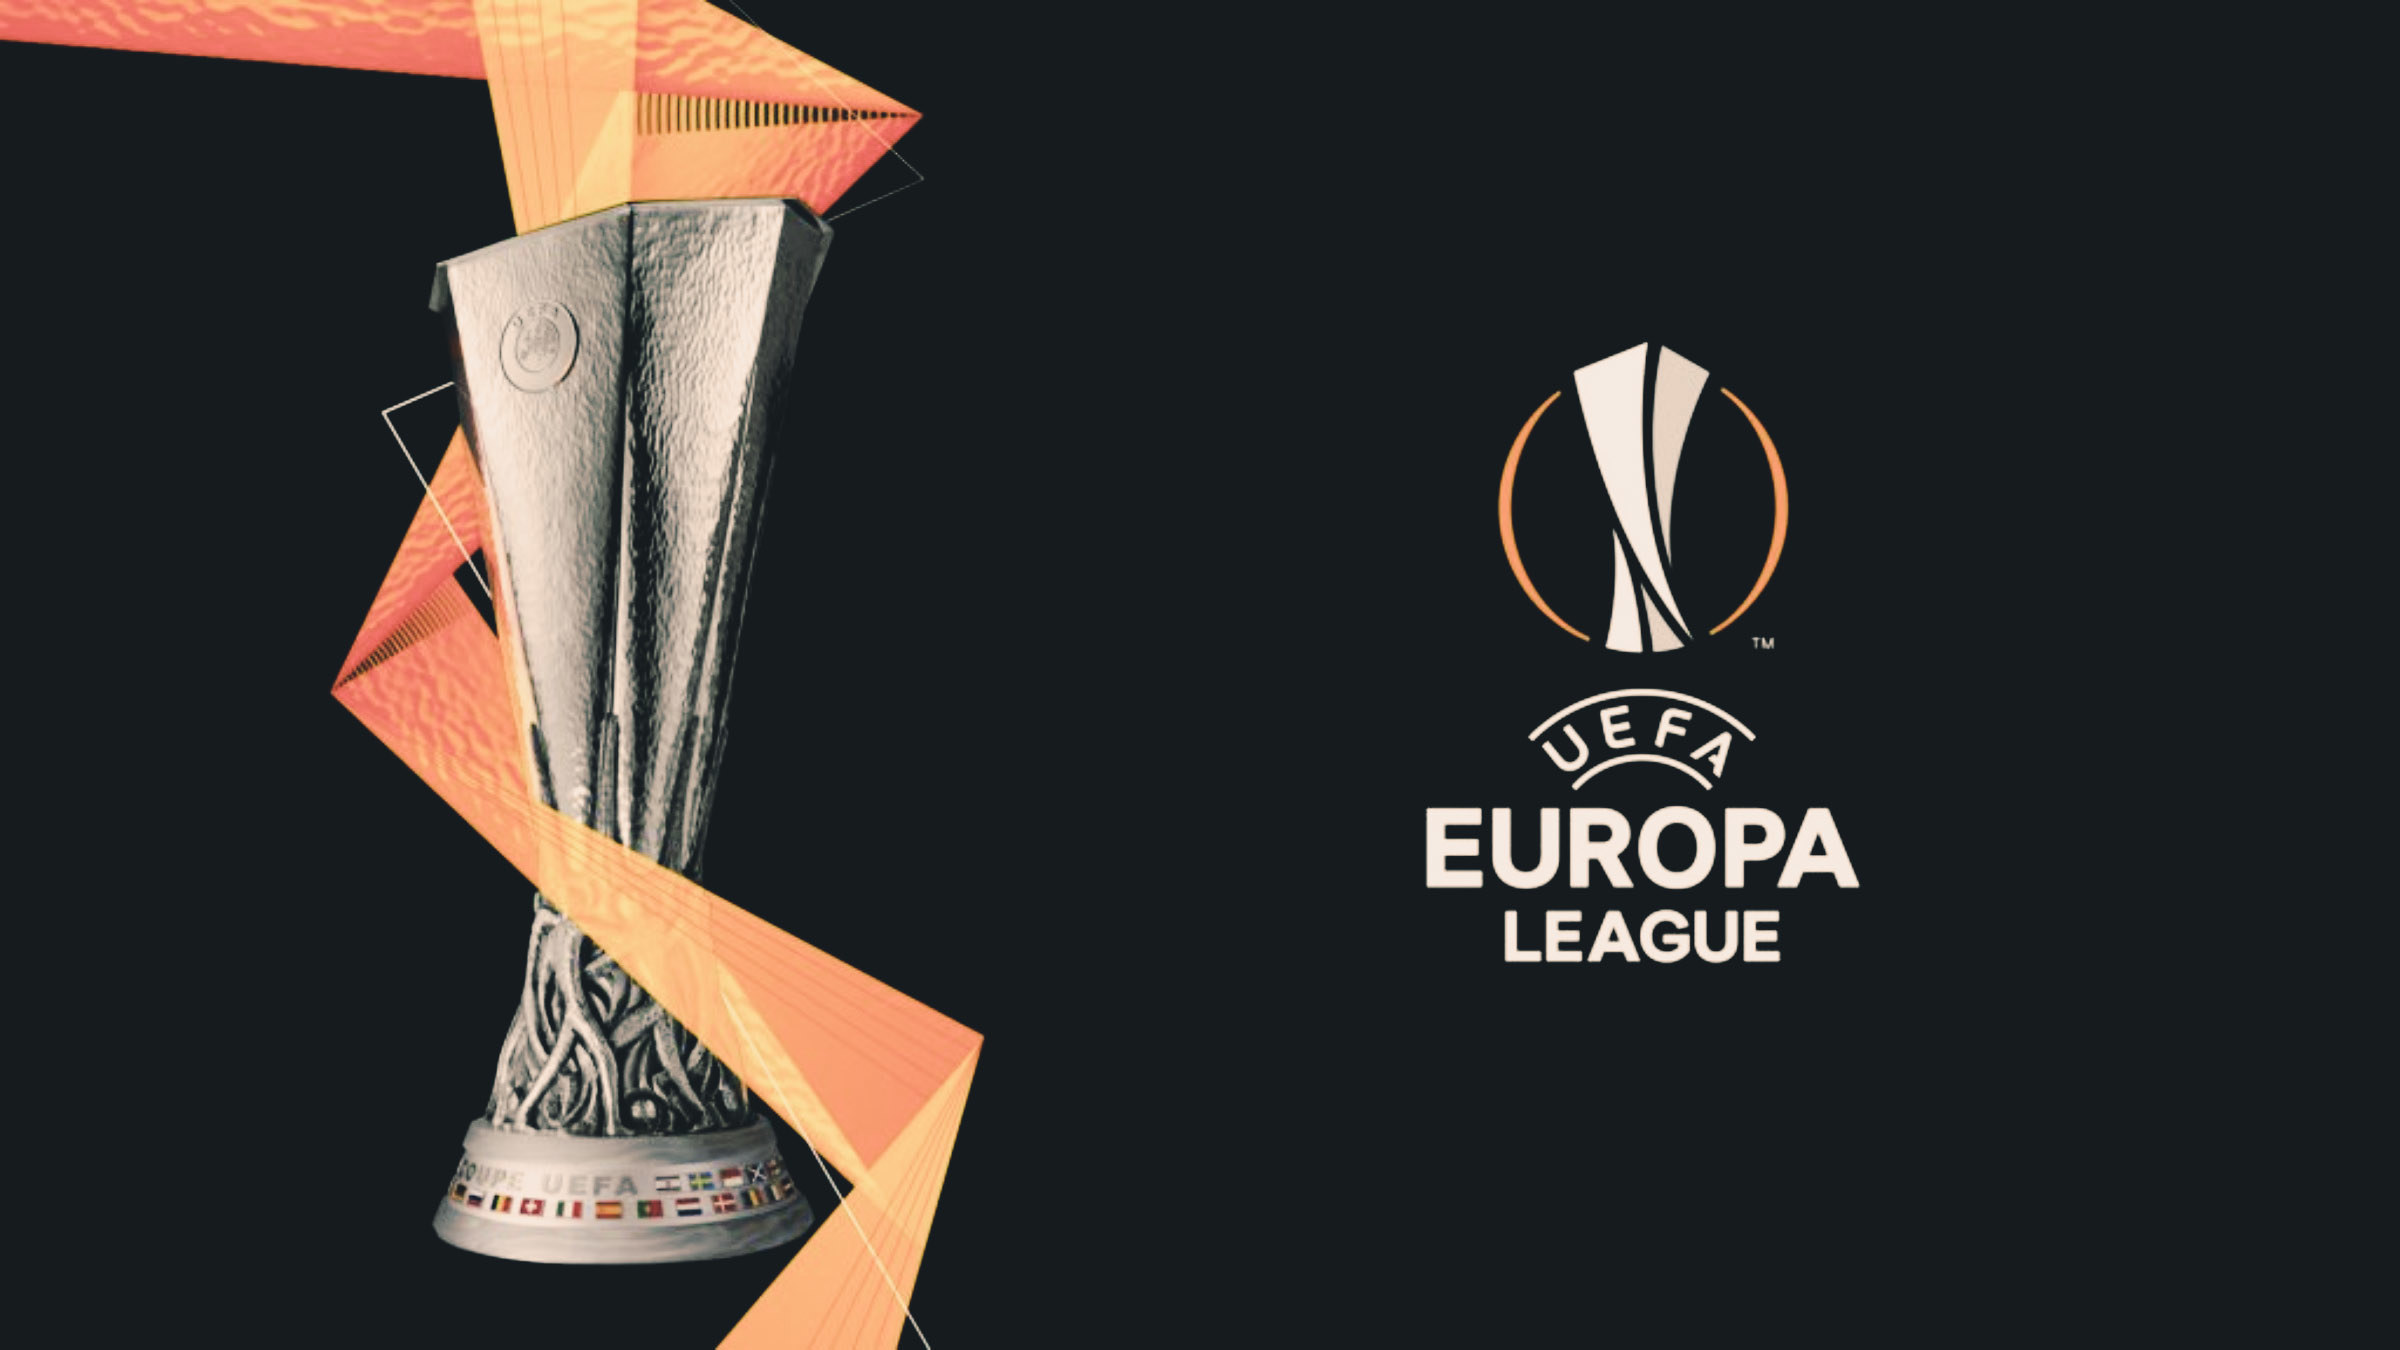 Кубок уефа википедия. UEFA Europa League 2022. UEFA Europa League 2021. Лига Европы УЕФА эмблема. UEFA Europa League логотип.